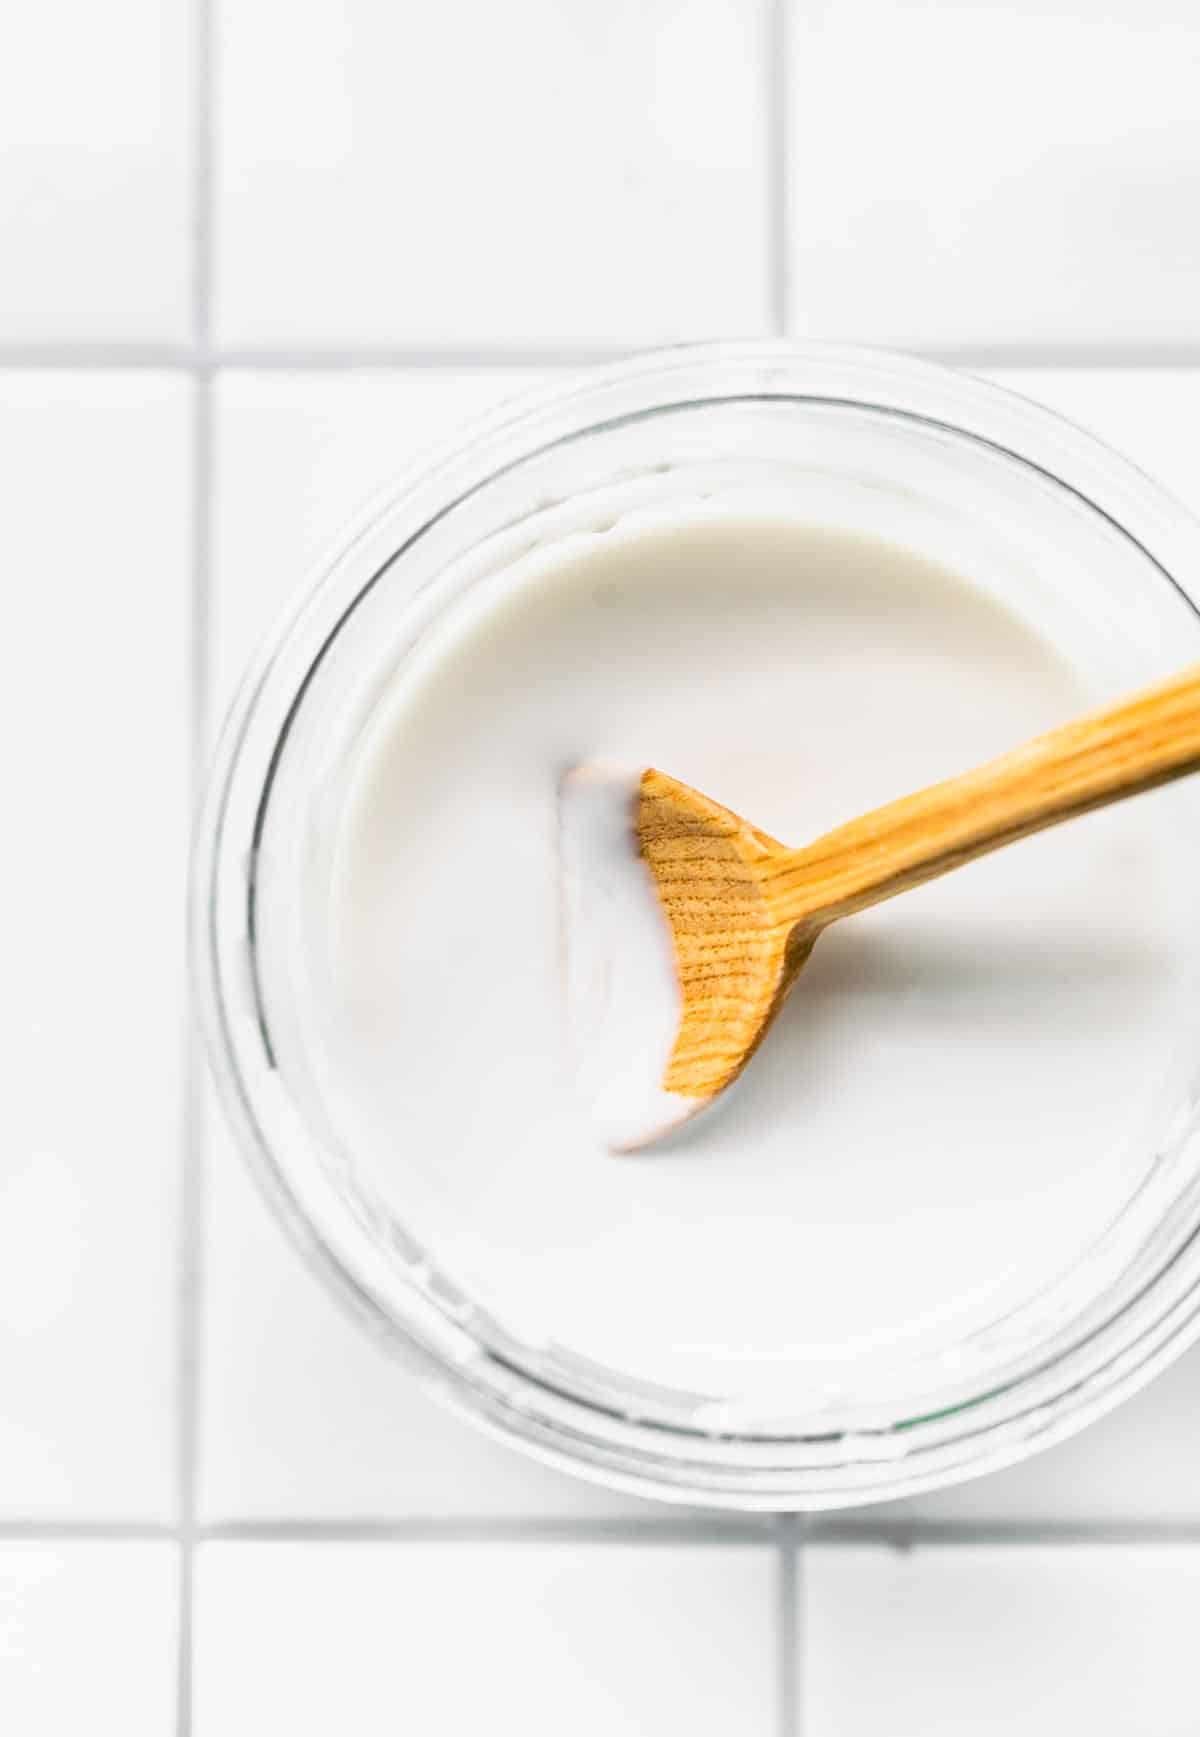 Overhead image of a wooden spoon stirring coconut milk yogurt.